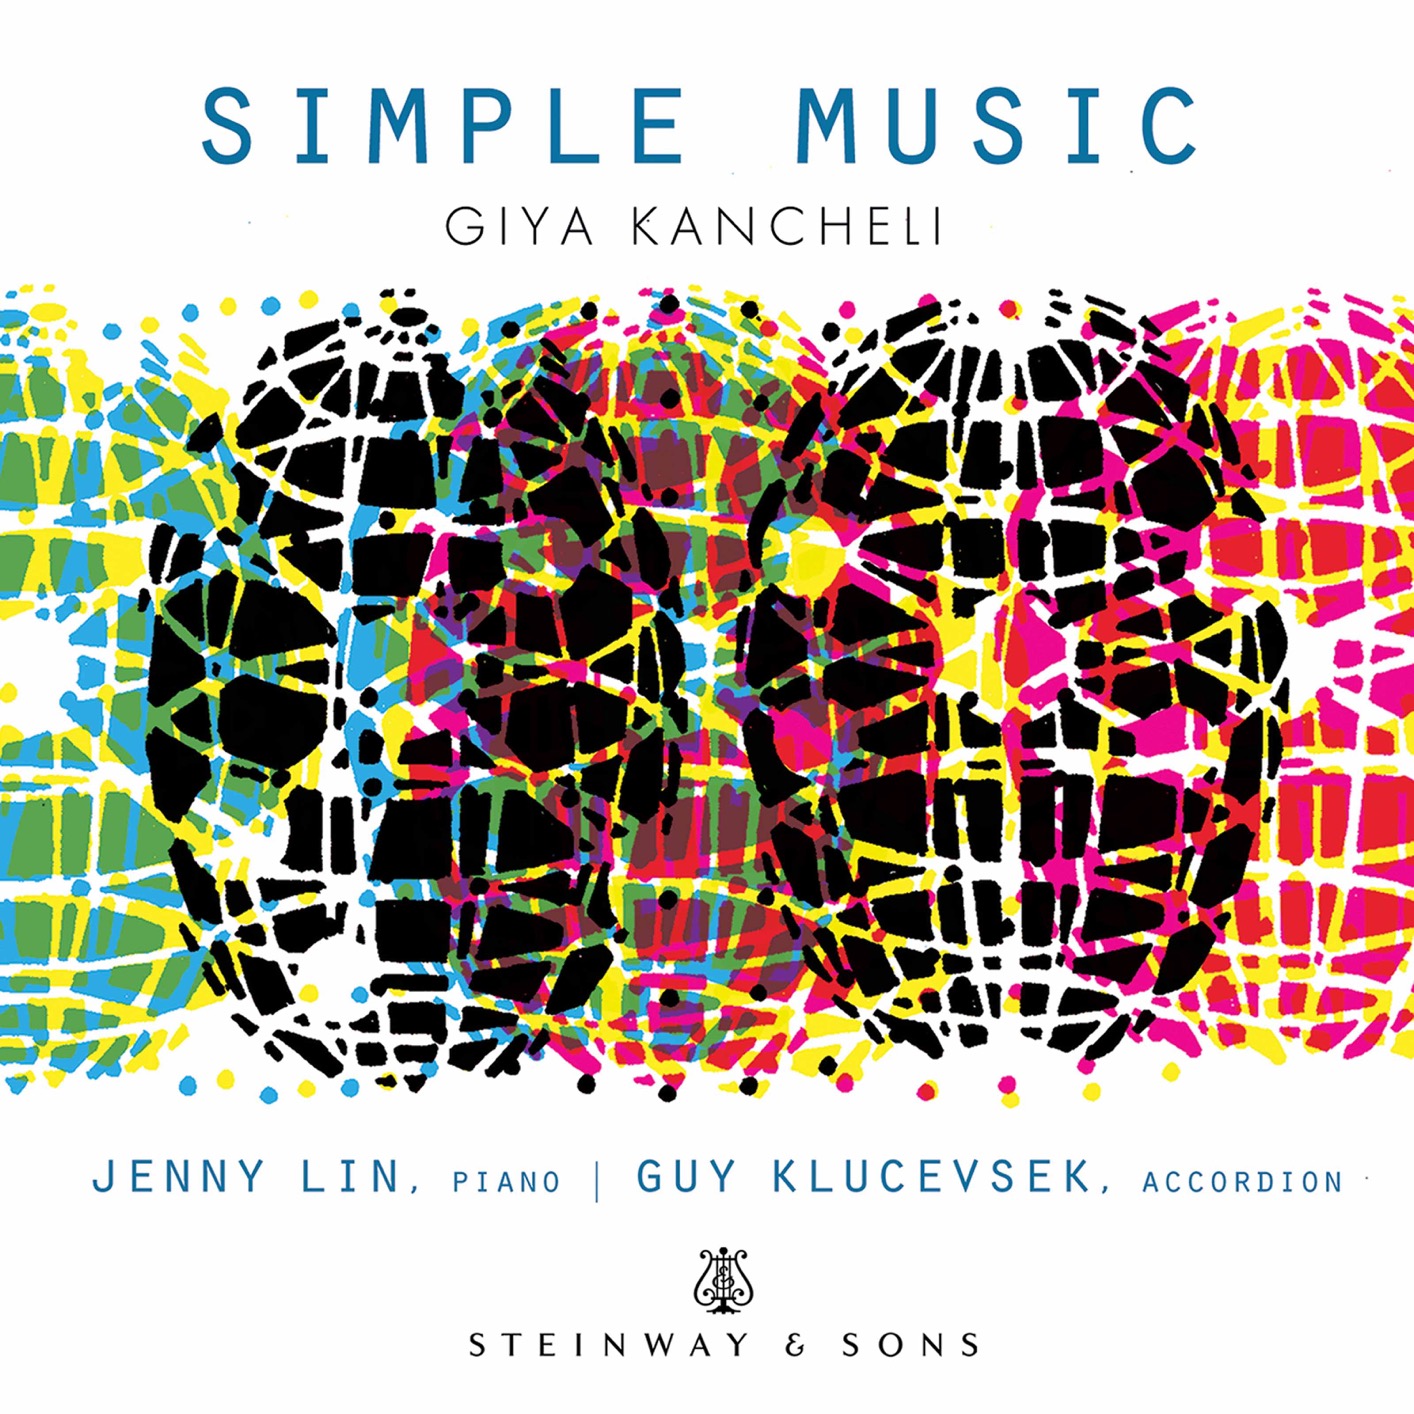 Jenny Lin & Guy Klucevsek - Kancheli - Simple Music (2021) [FLAC 24bit/192kHz]